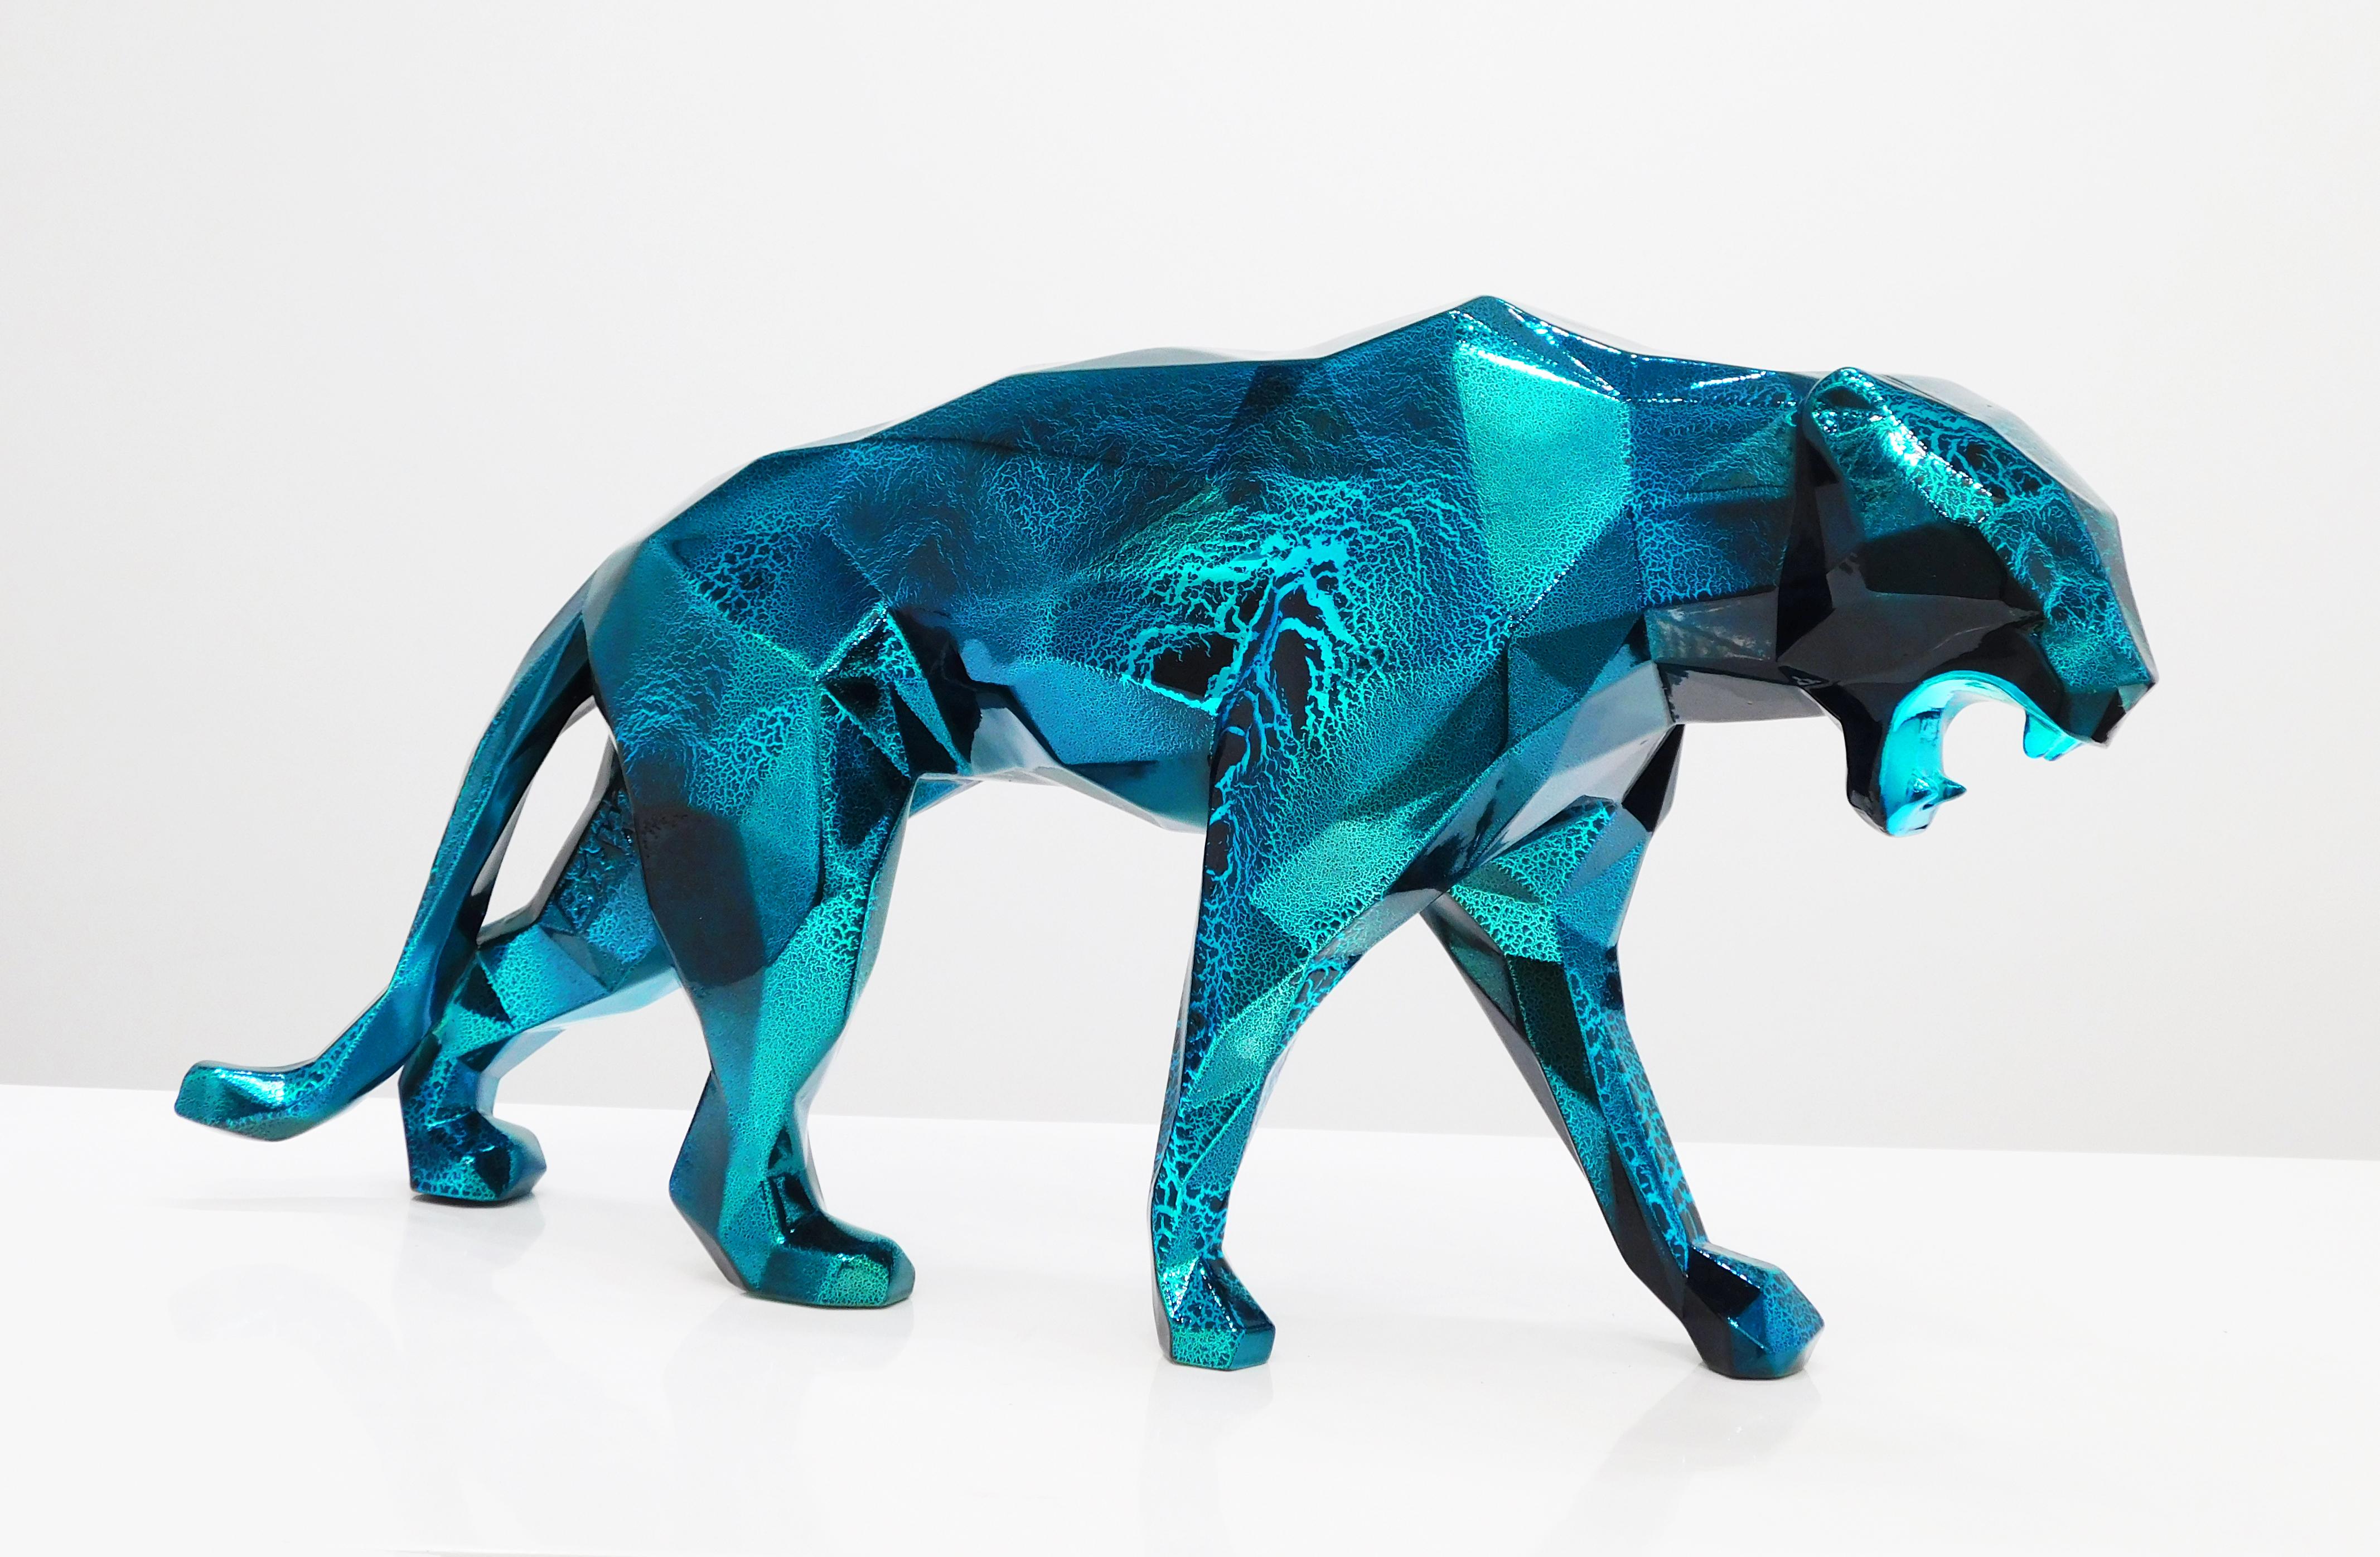 Richard Orlinski Figurative Sculpture - Panther Chrome Crackled Turquoise